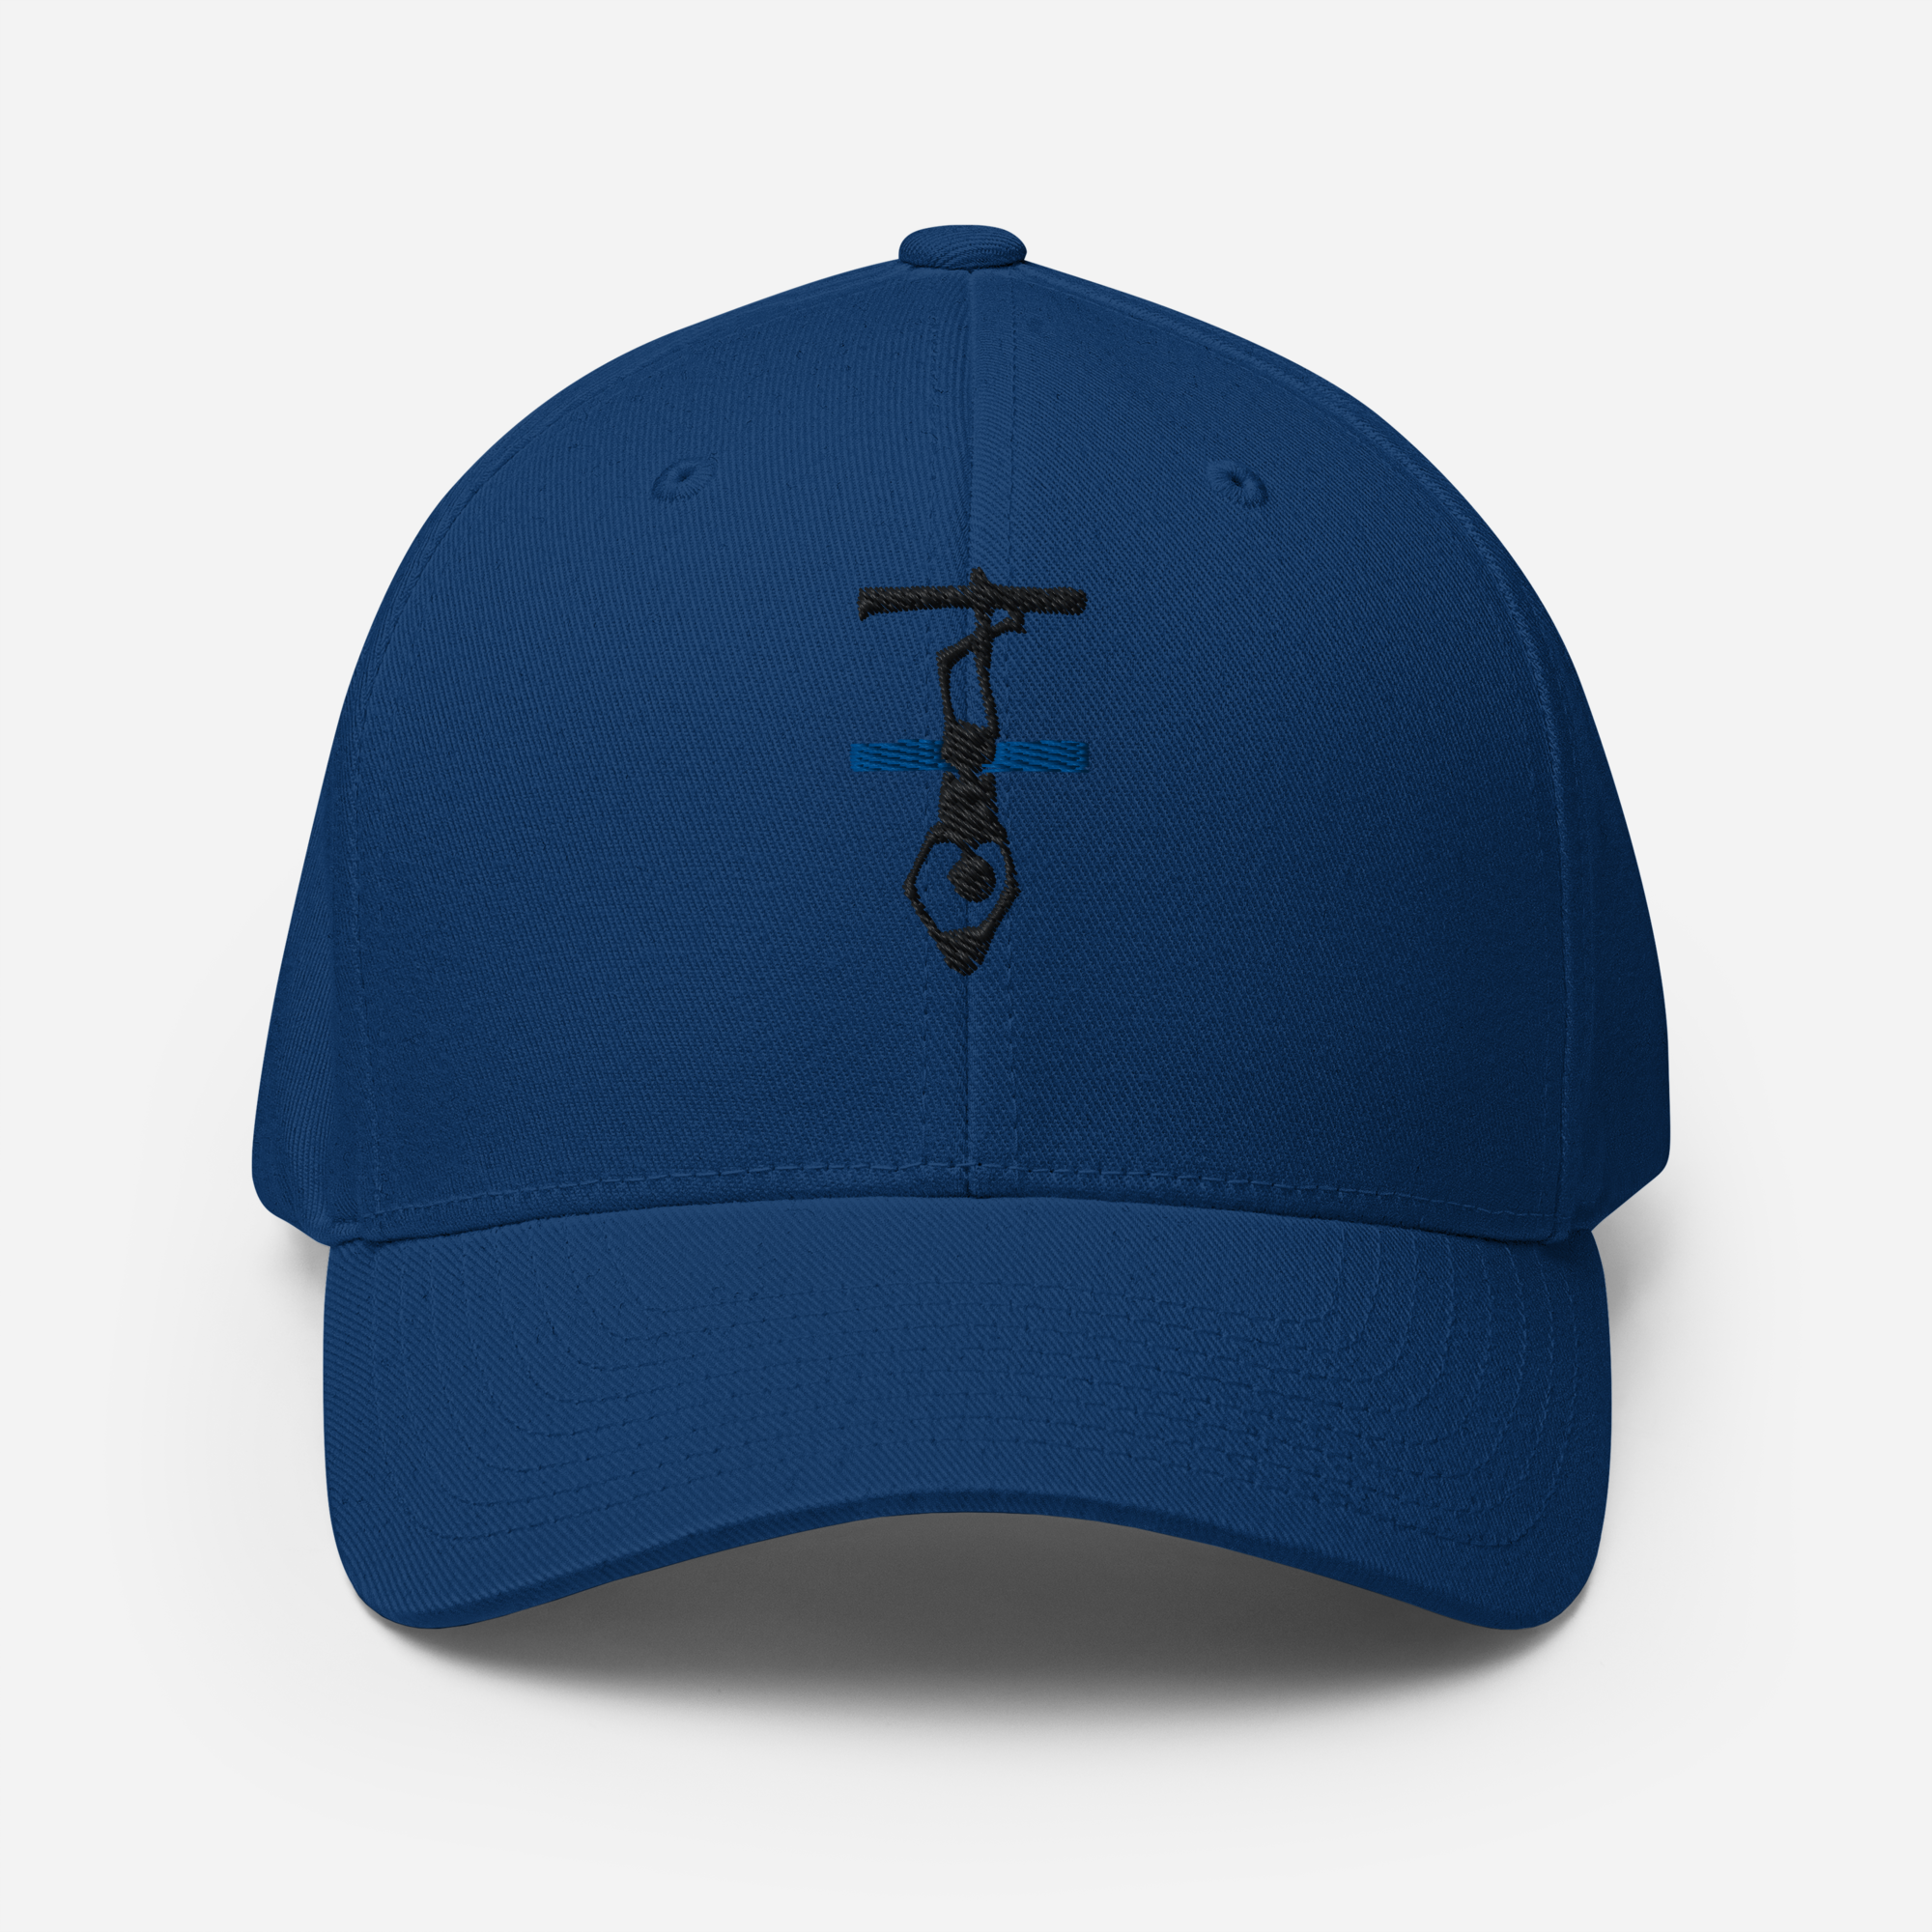 Thin Blue Line Hanged Man Structured Twill Cap - Black Logo